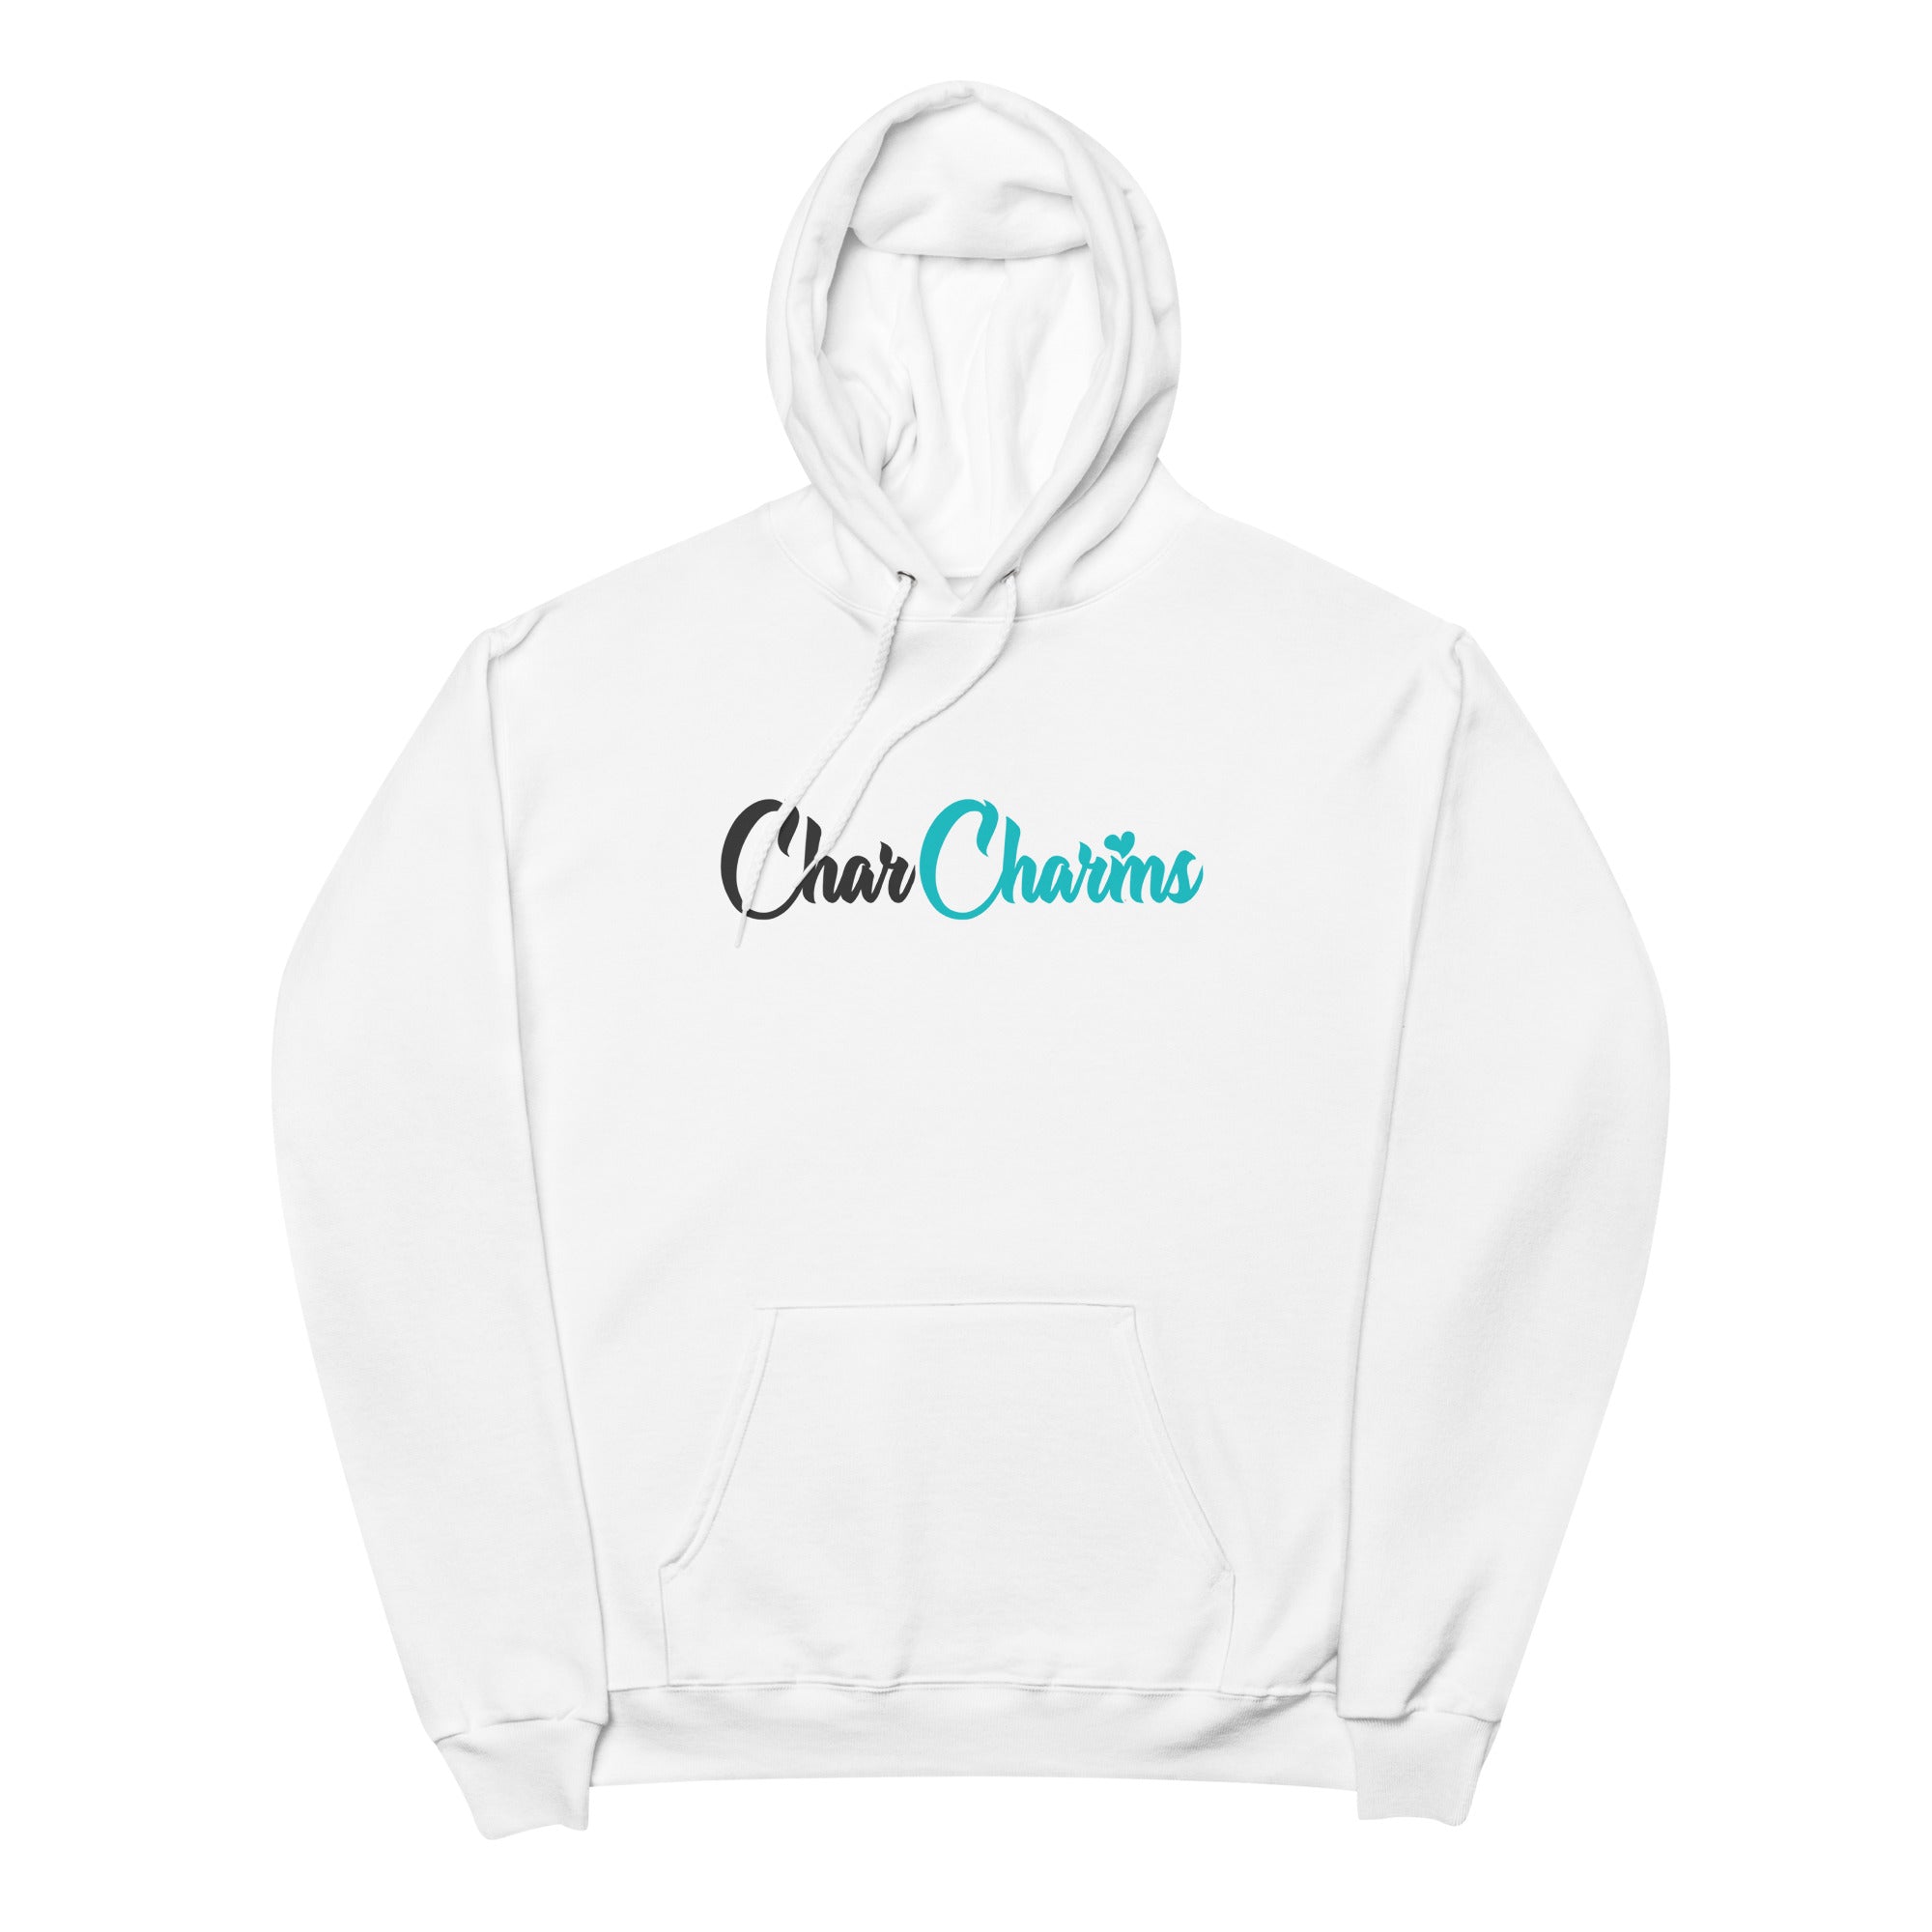 CharCharms Merchandise White Sweatshirt Hoodie